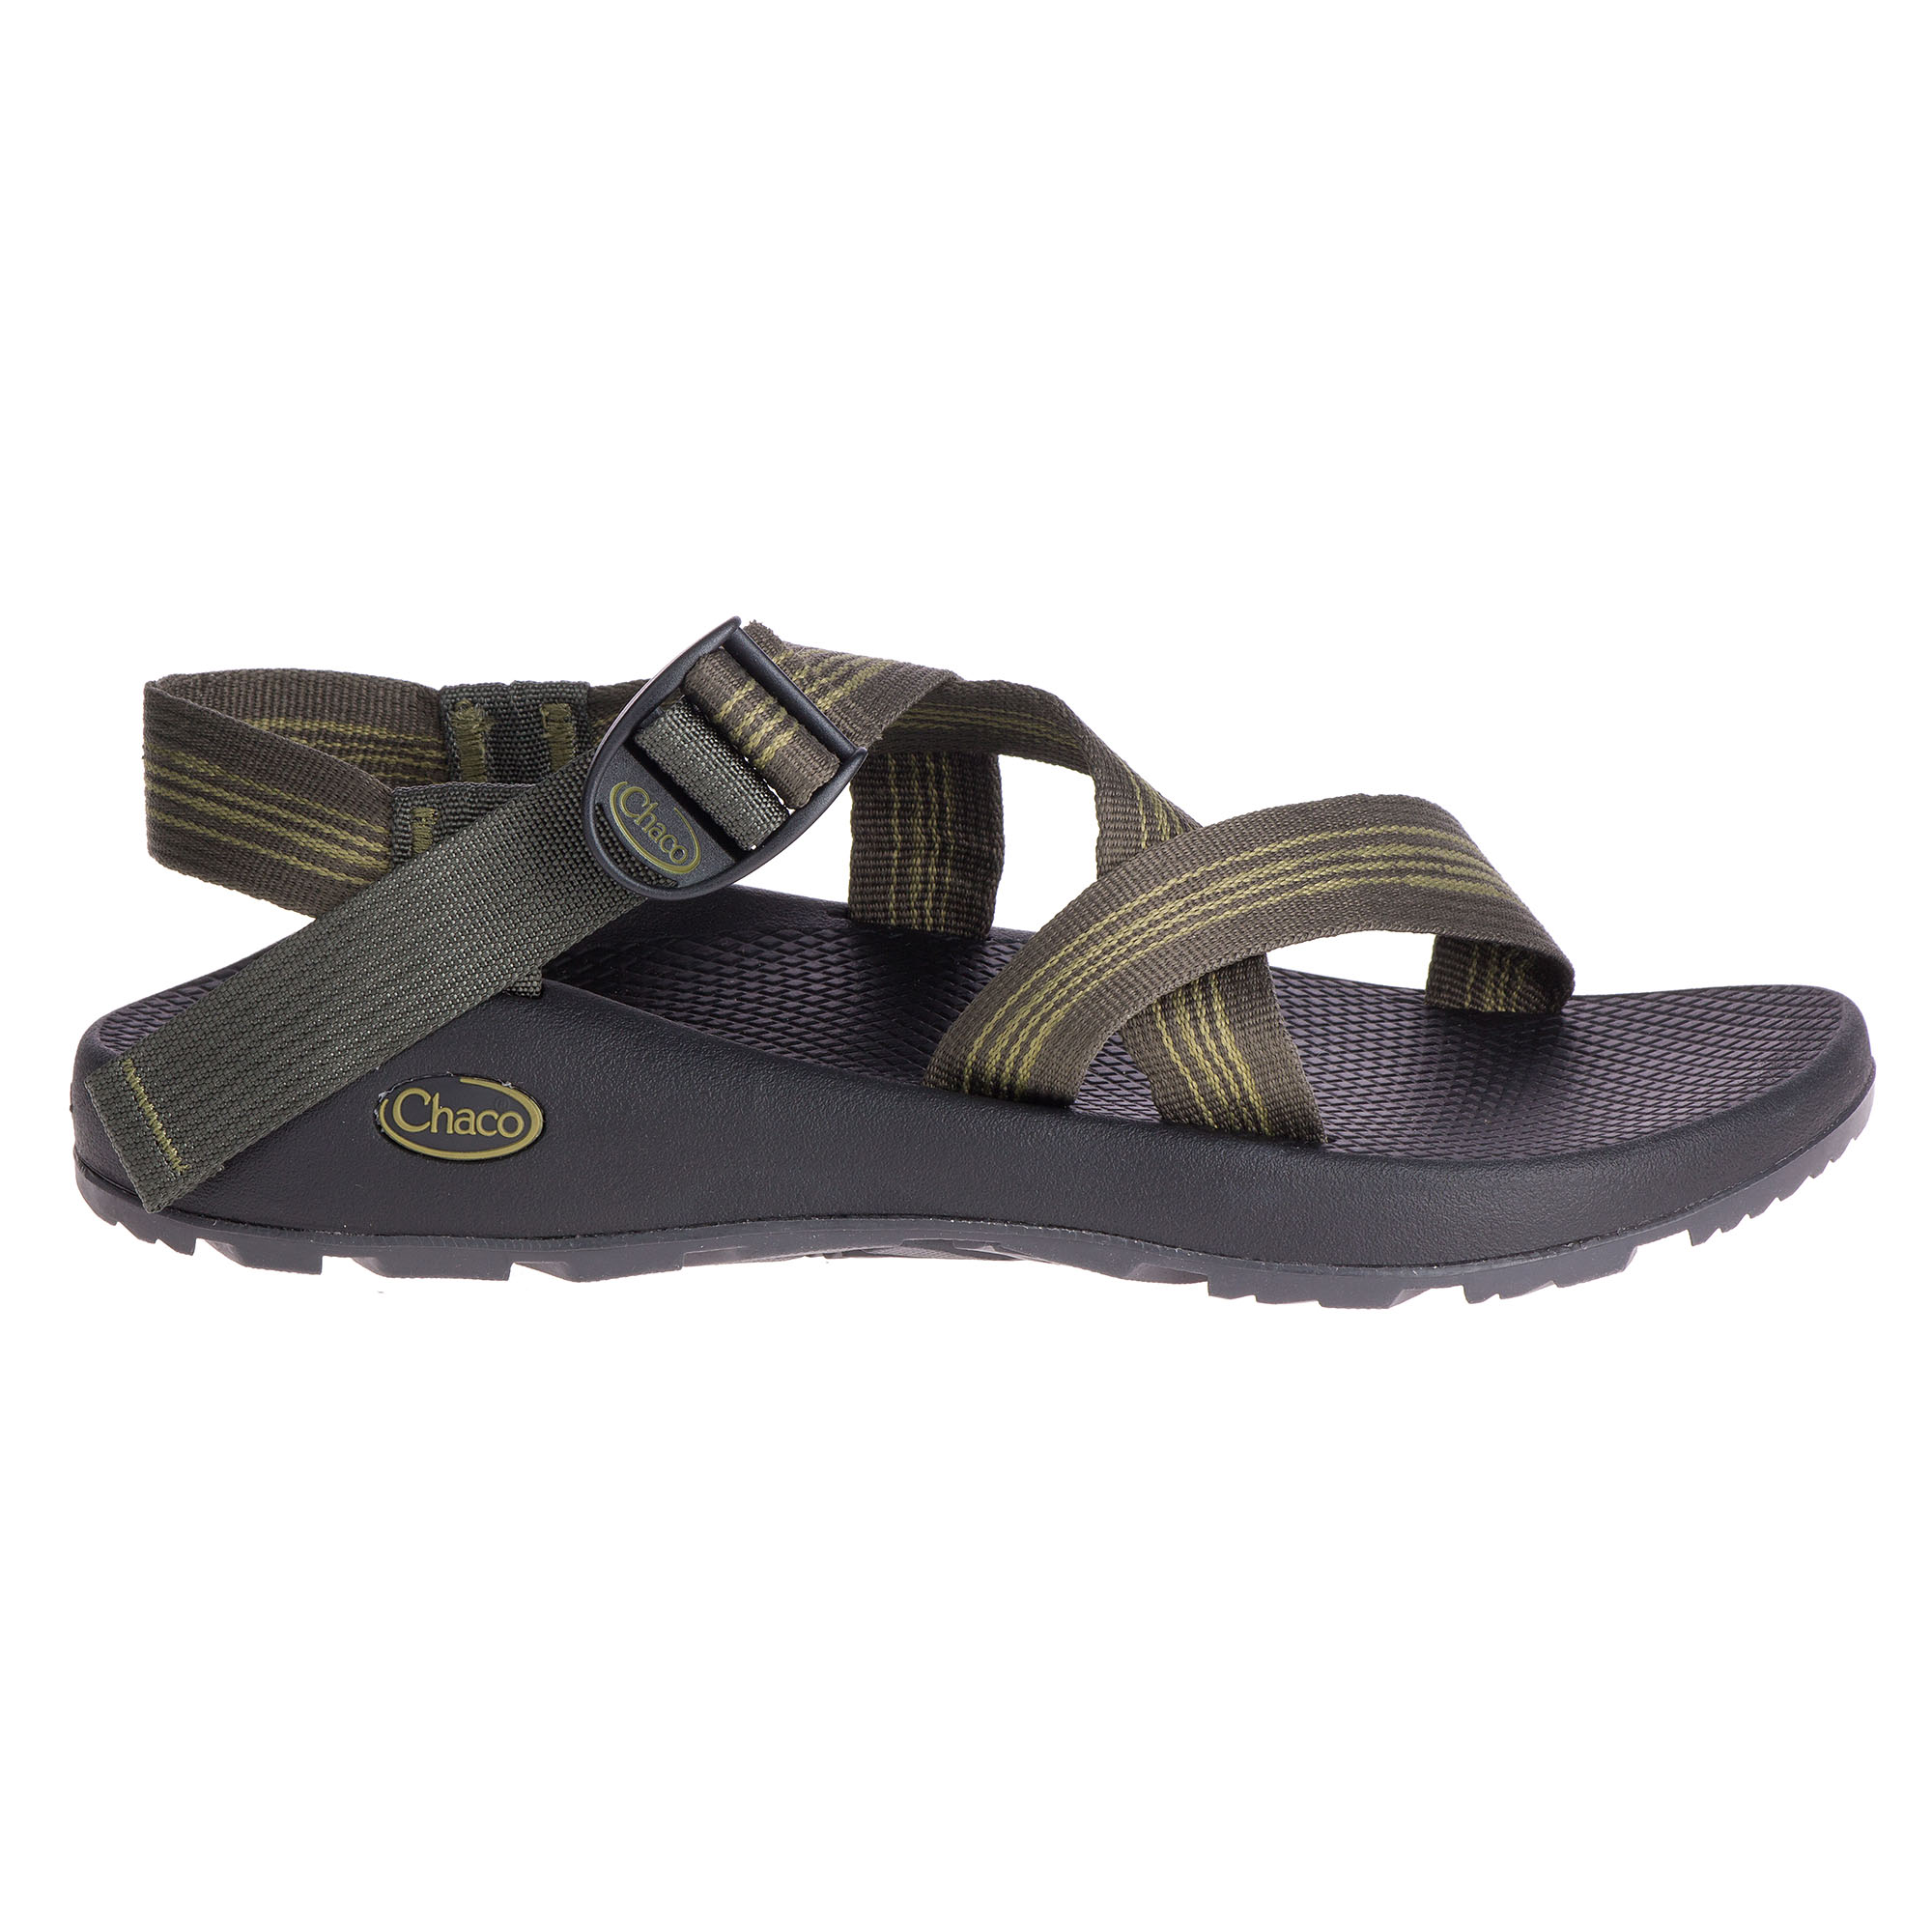 Chaco Men's Z/1 Classic Sandals - Sun 